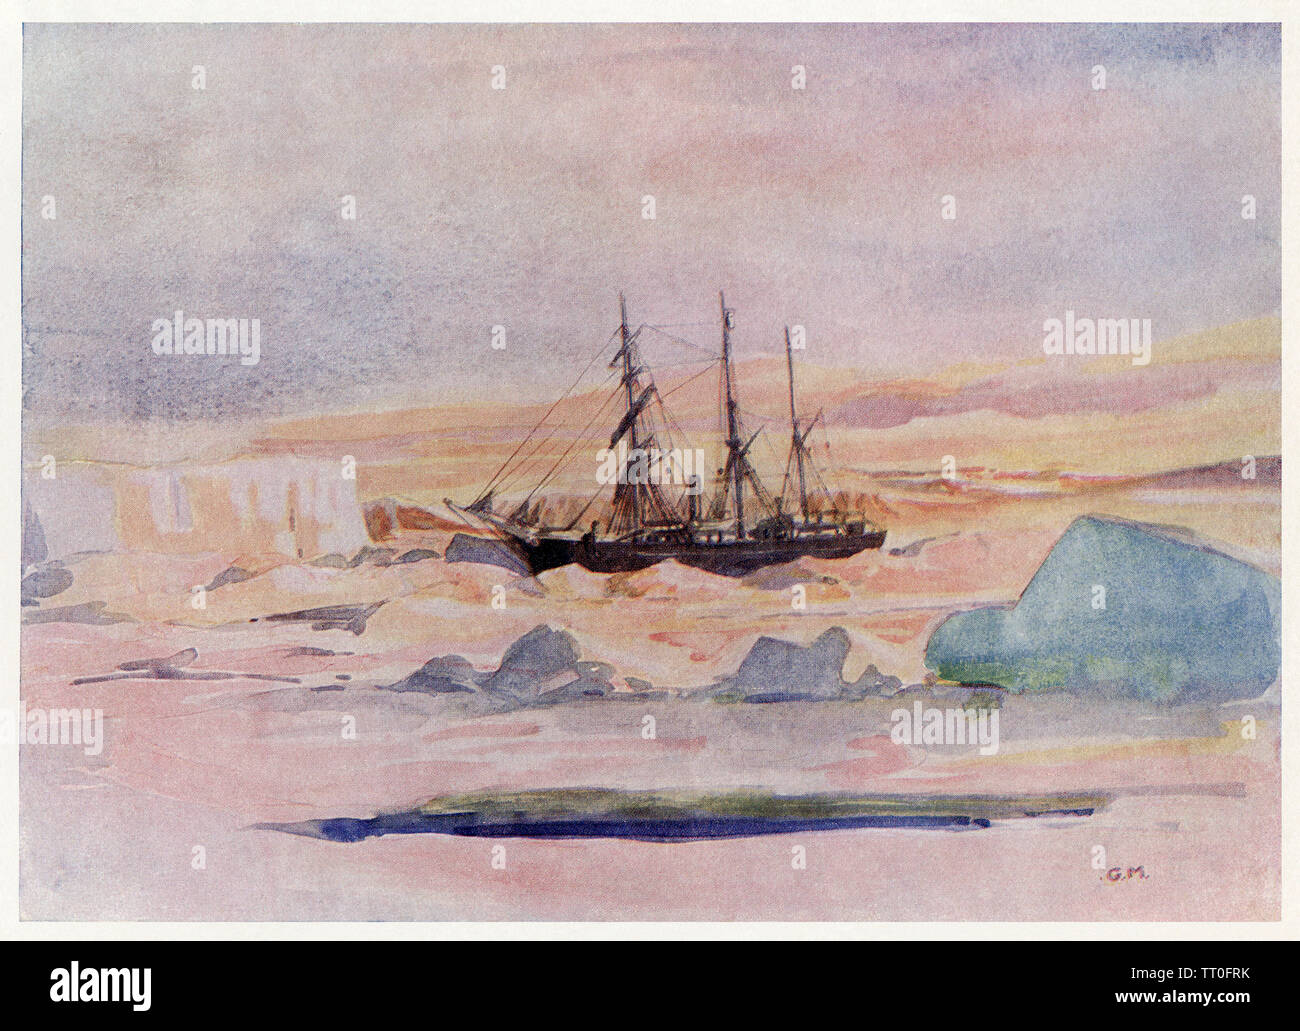 Shacketon's ship Nimrod in McMurdo Sound ice, Antarctica. Color halftone of an illustration Stock Photo